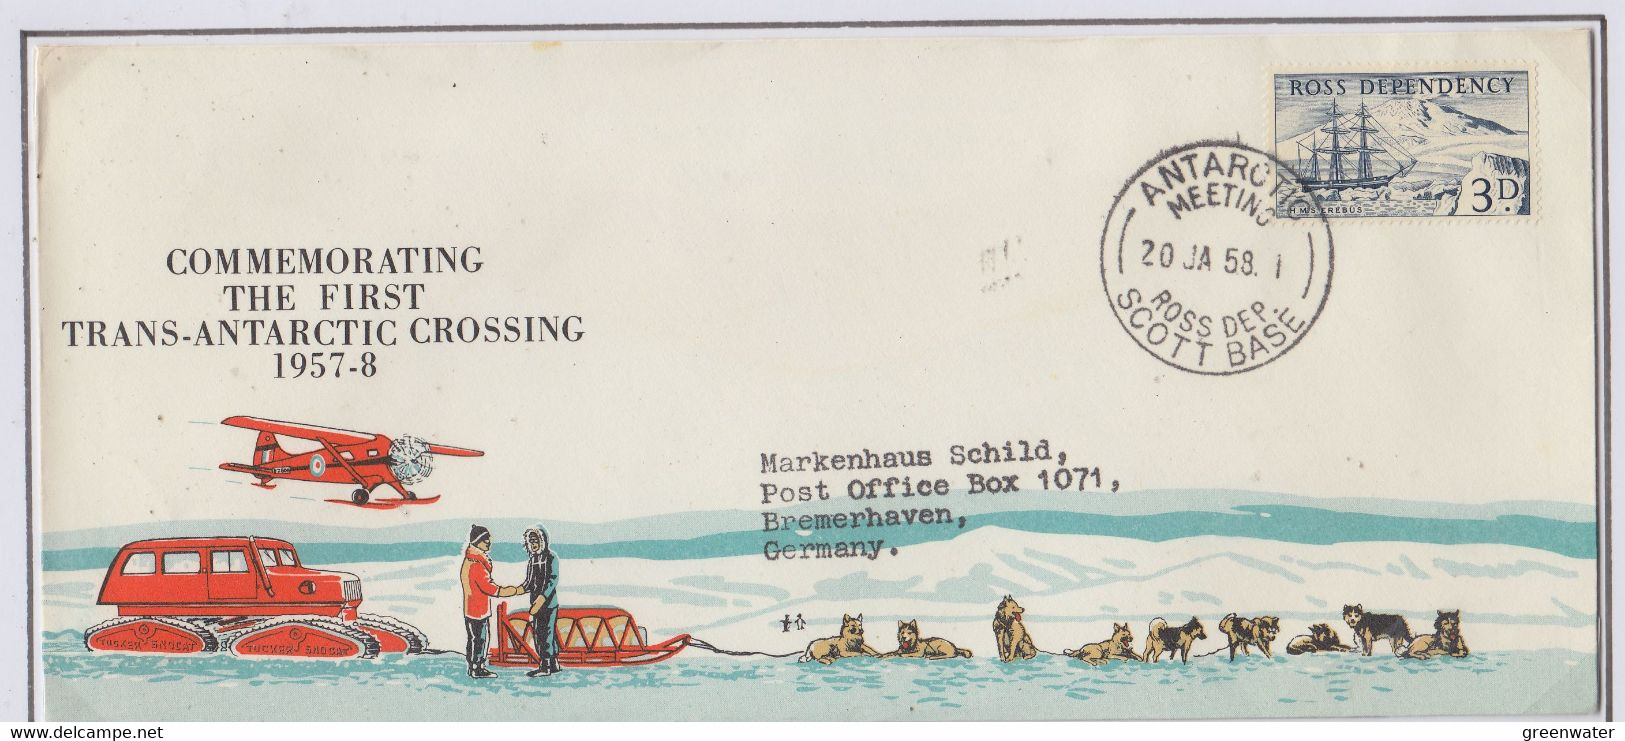 Ross Dependency 1958 Commemorating 1st Trans-Antarctic Crossing Cover Ca Scott Base 20 JA 58 (BO167) - Lettres & Documents